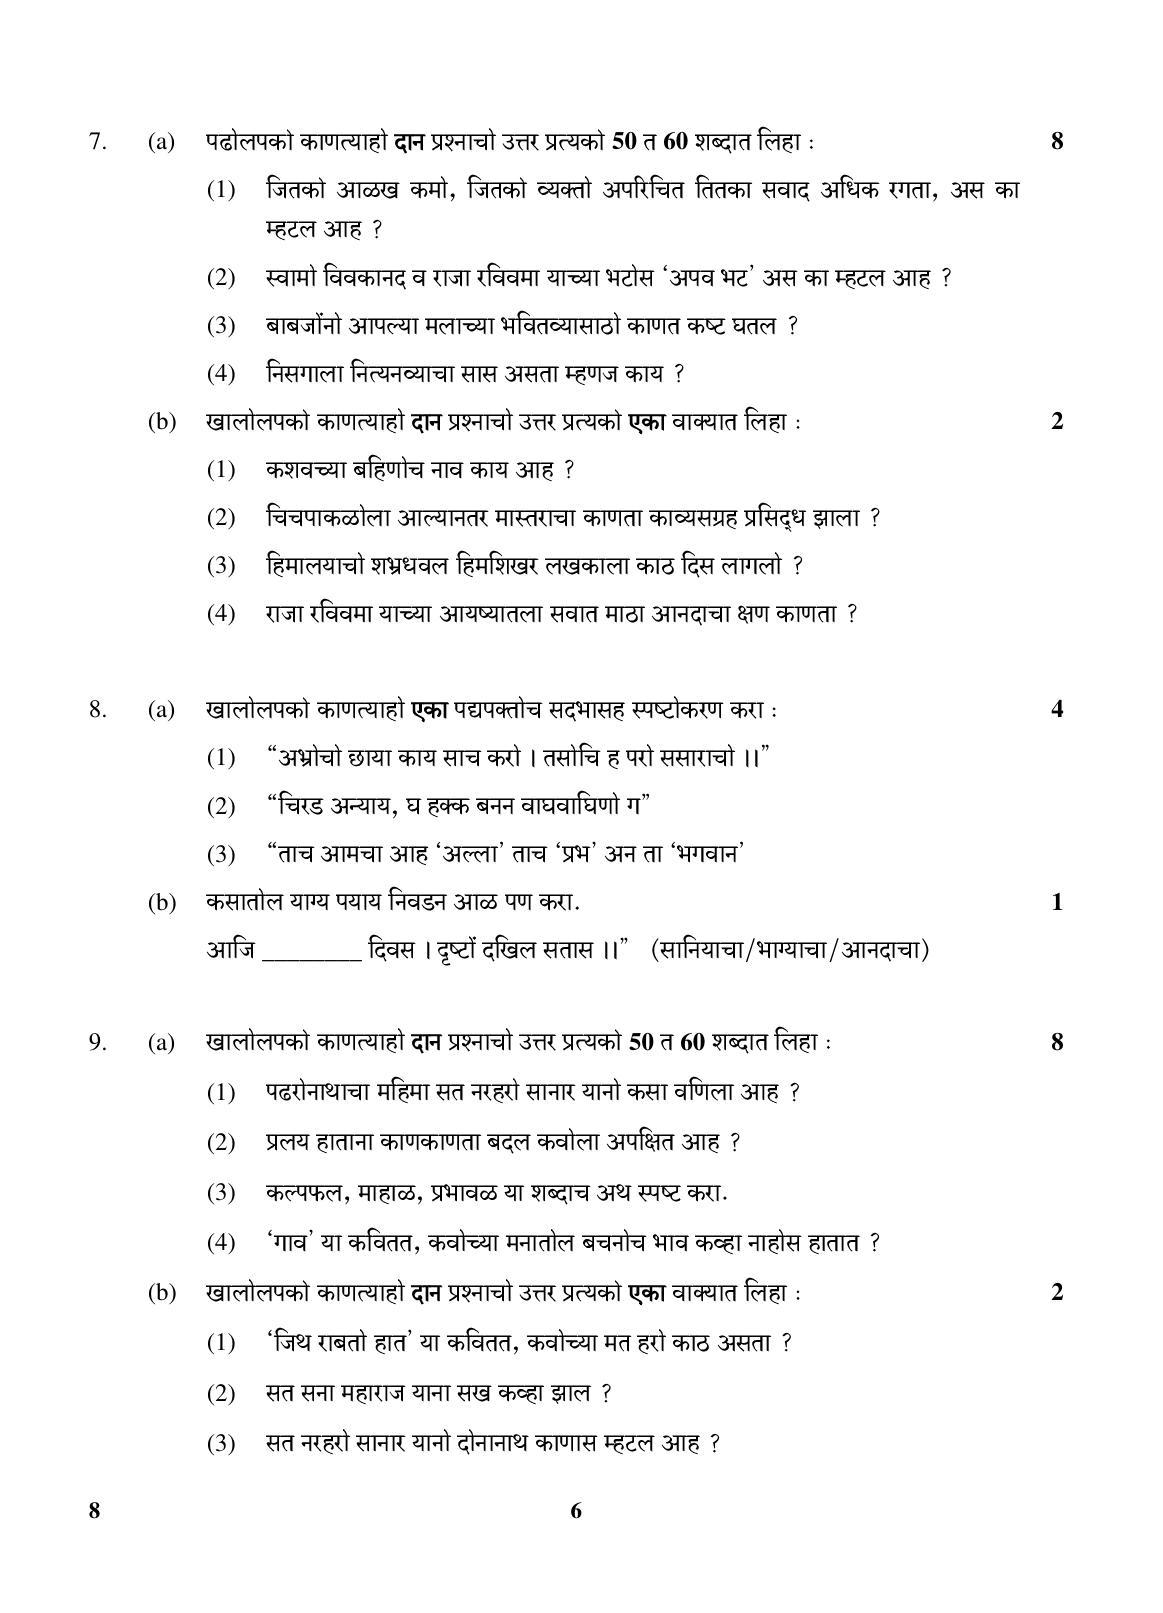 CBSE Class 10 8 (Marathi) 2018 Question Paper - Page 6